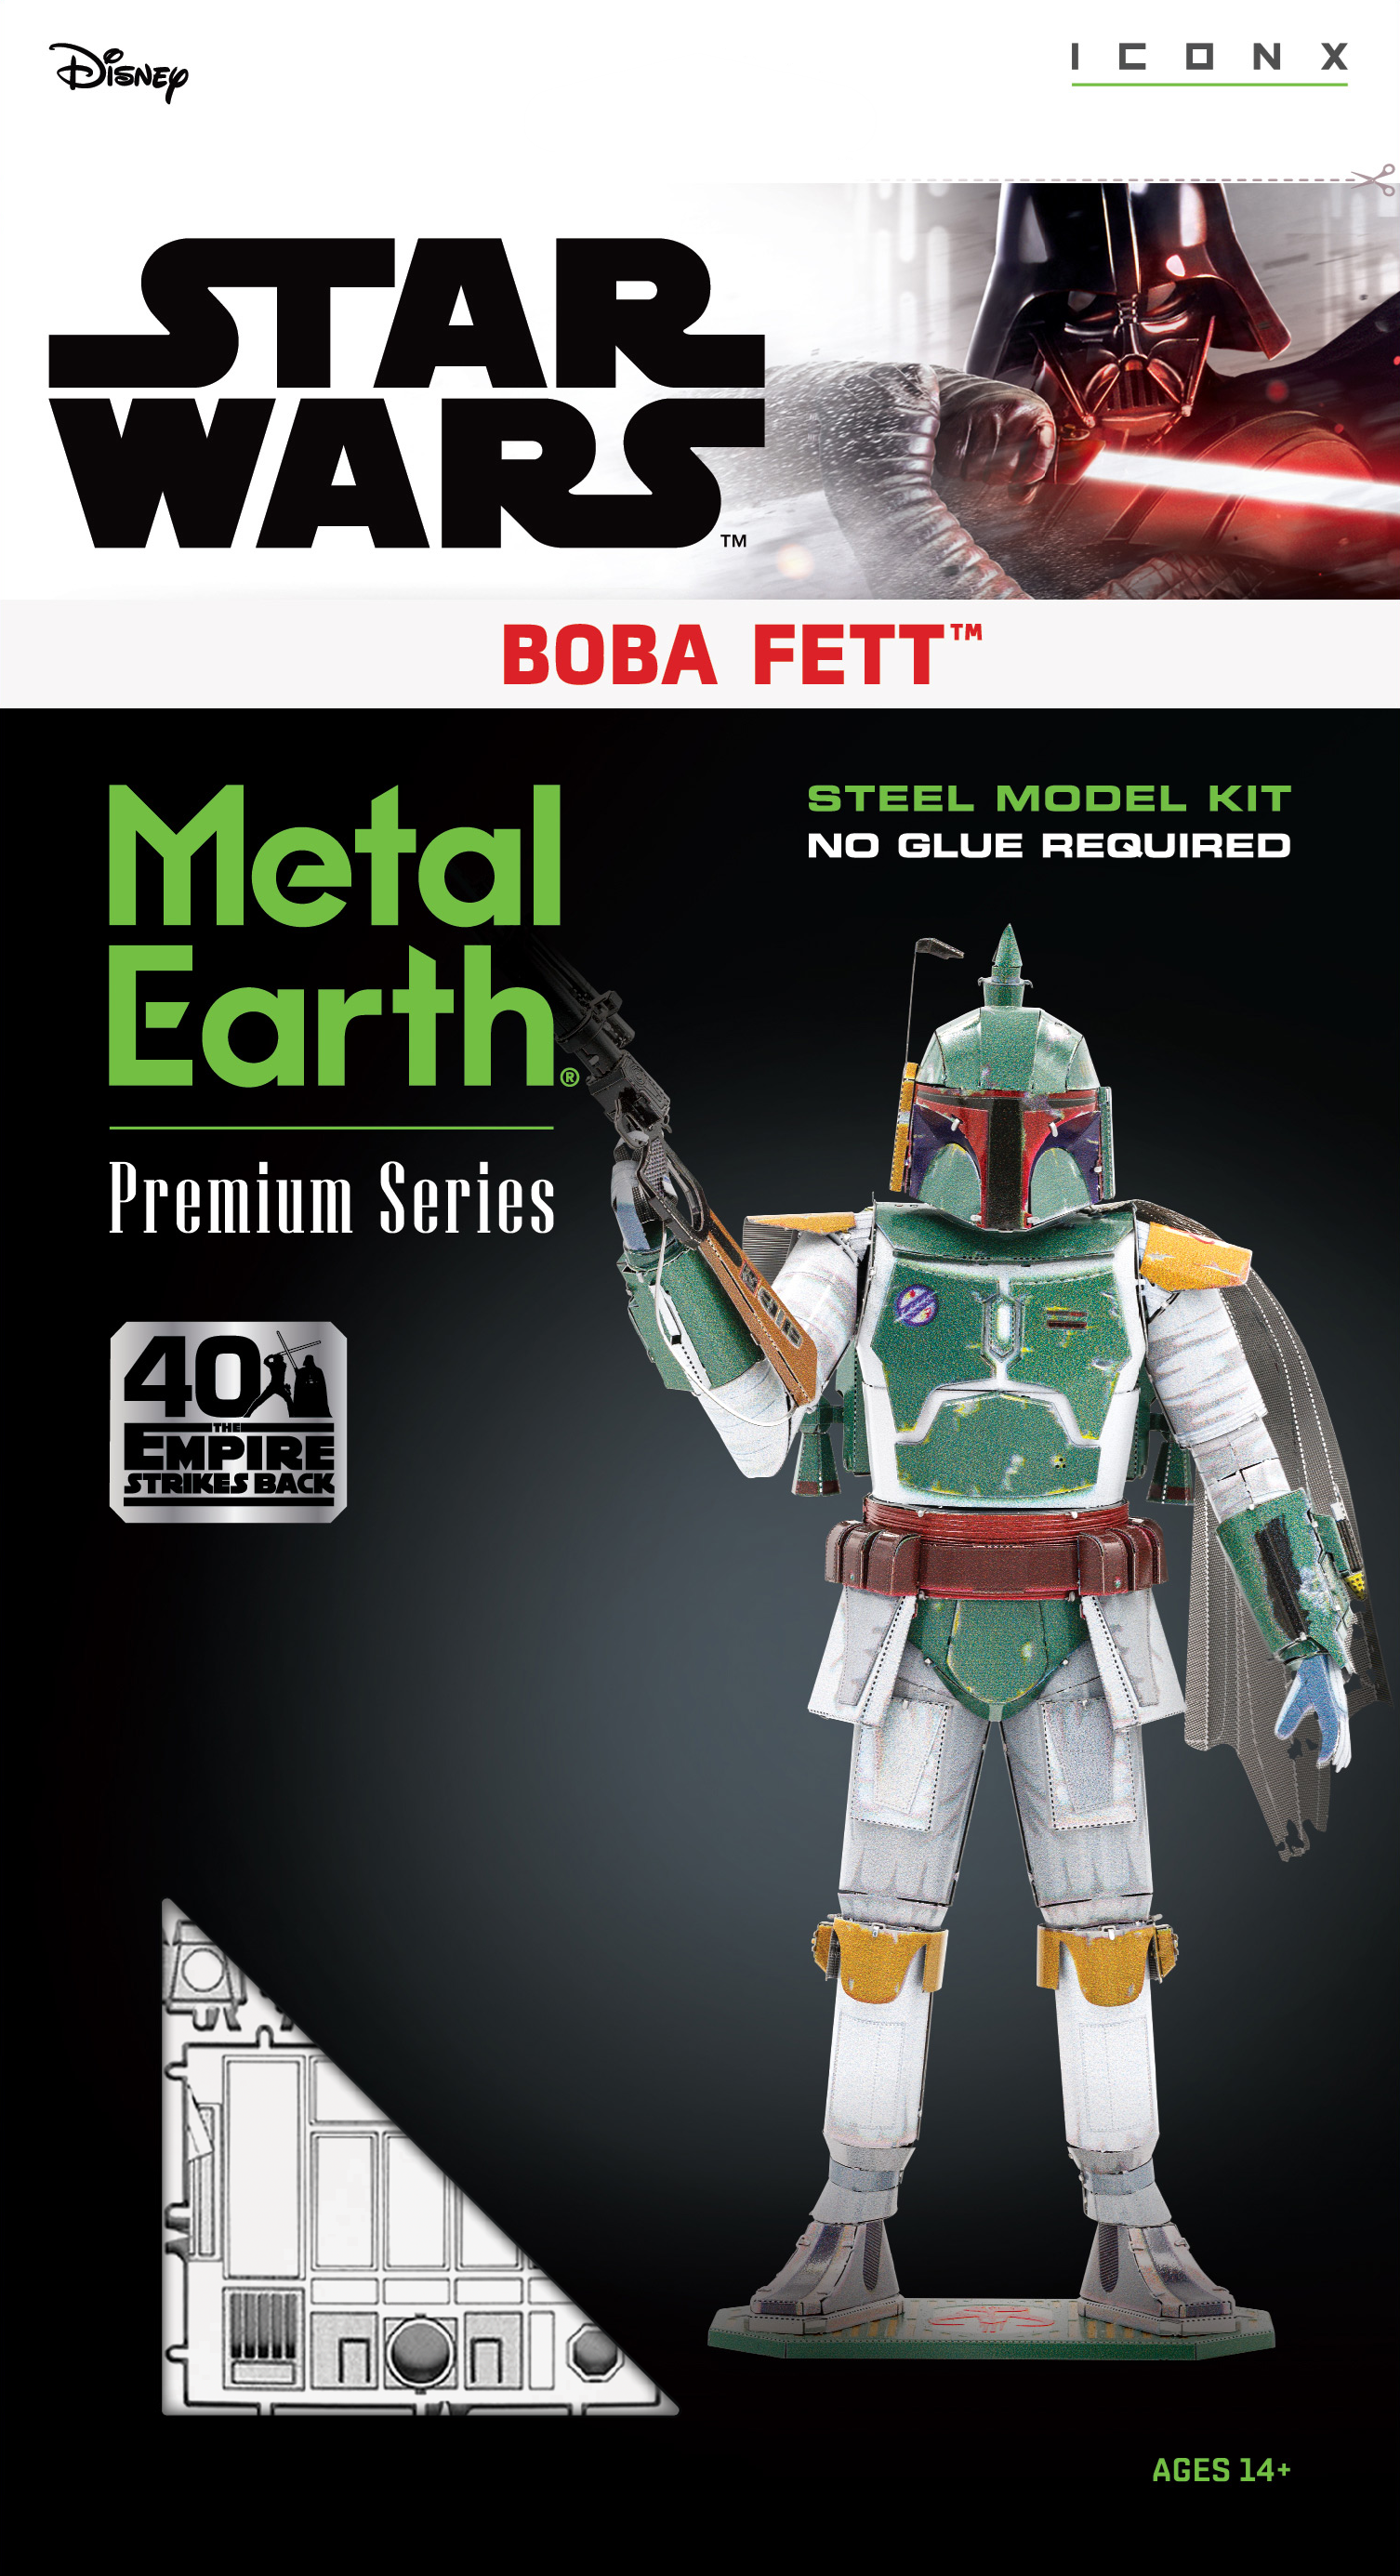 Metal Earth Iconx - Star Wars Boba Fett    